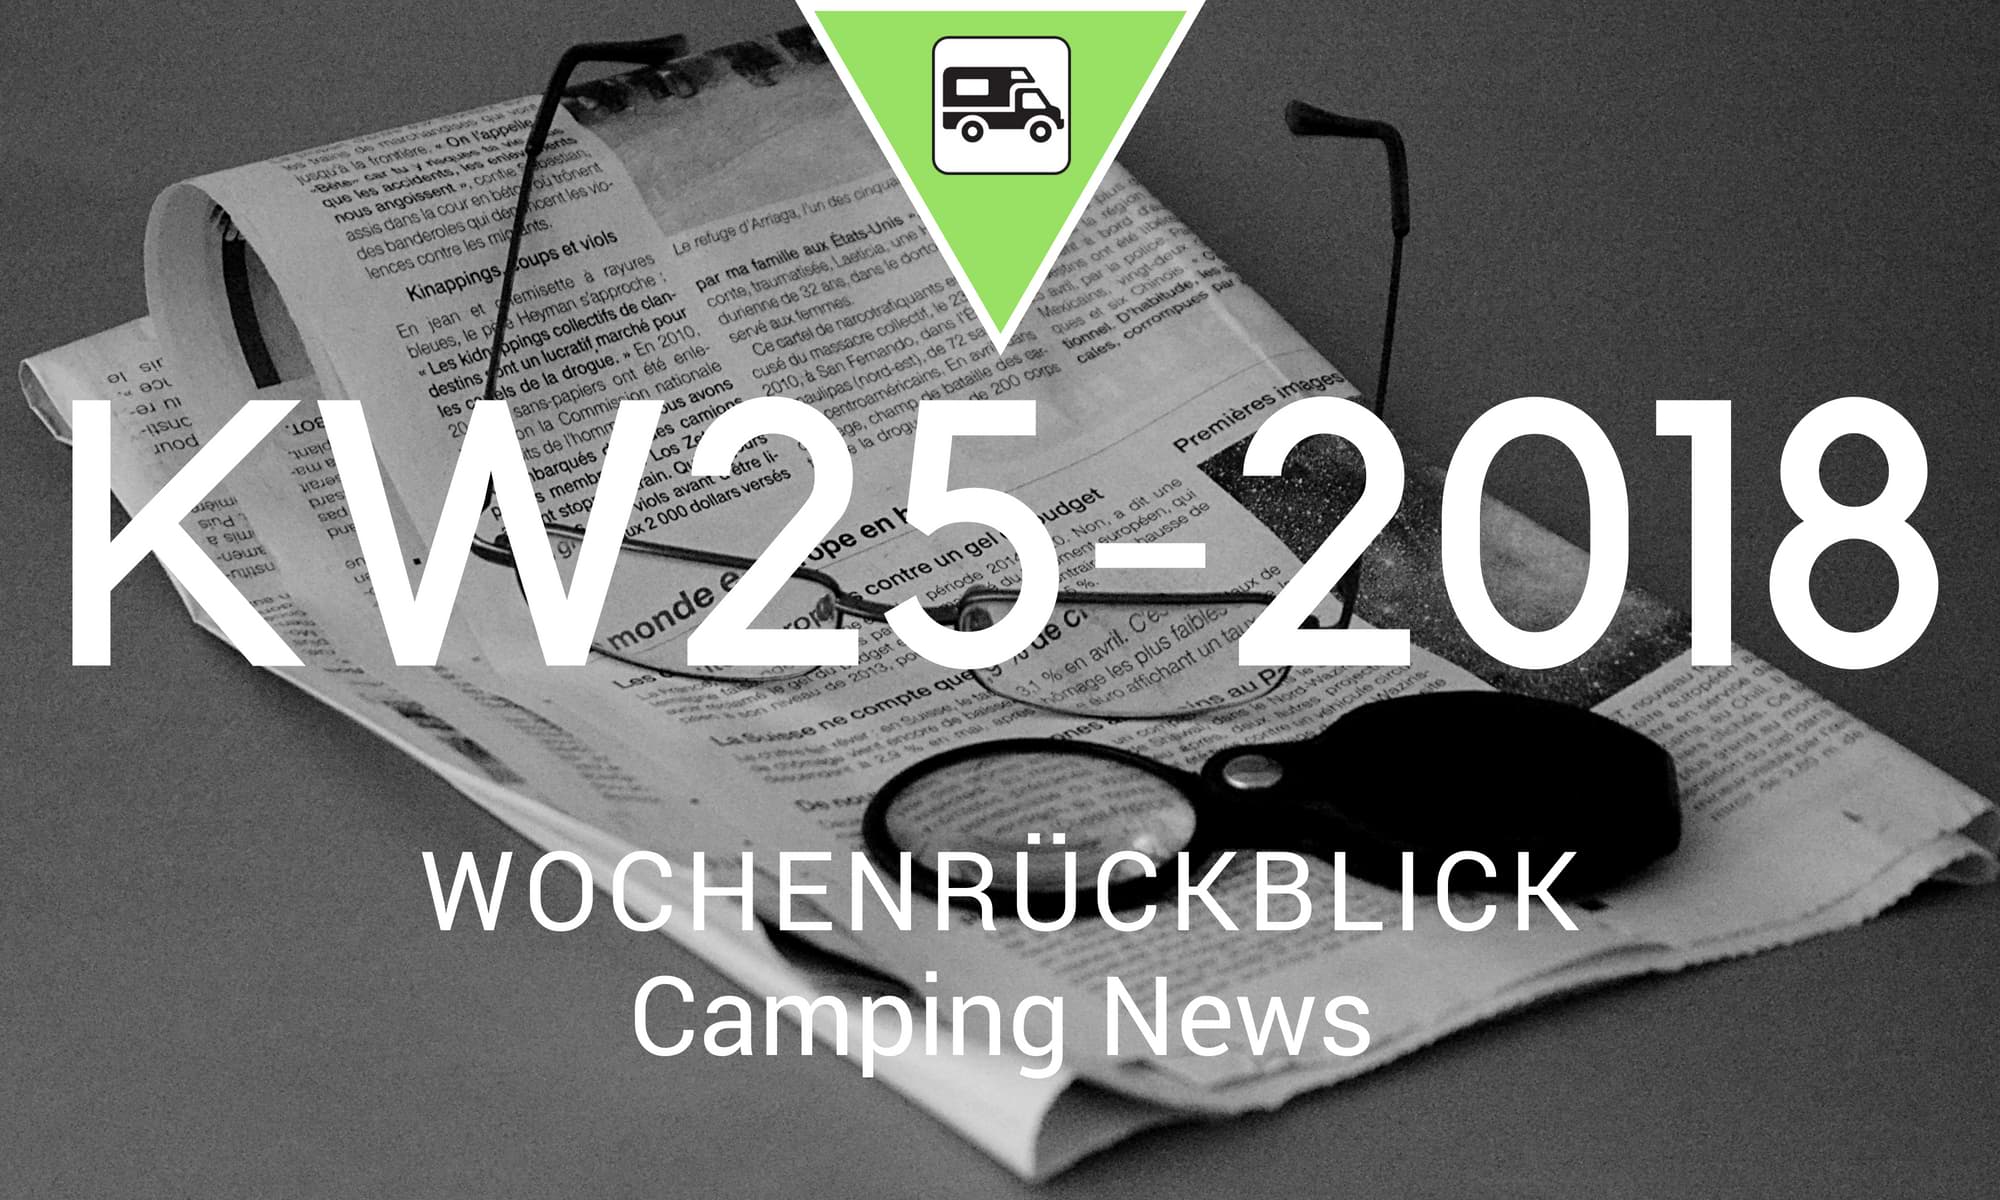 Wochenrückblick Camping News KW25-2018